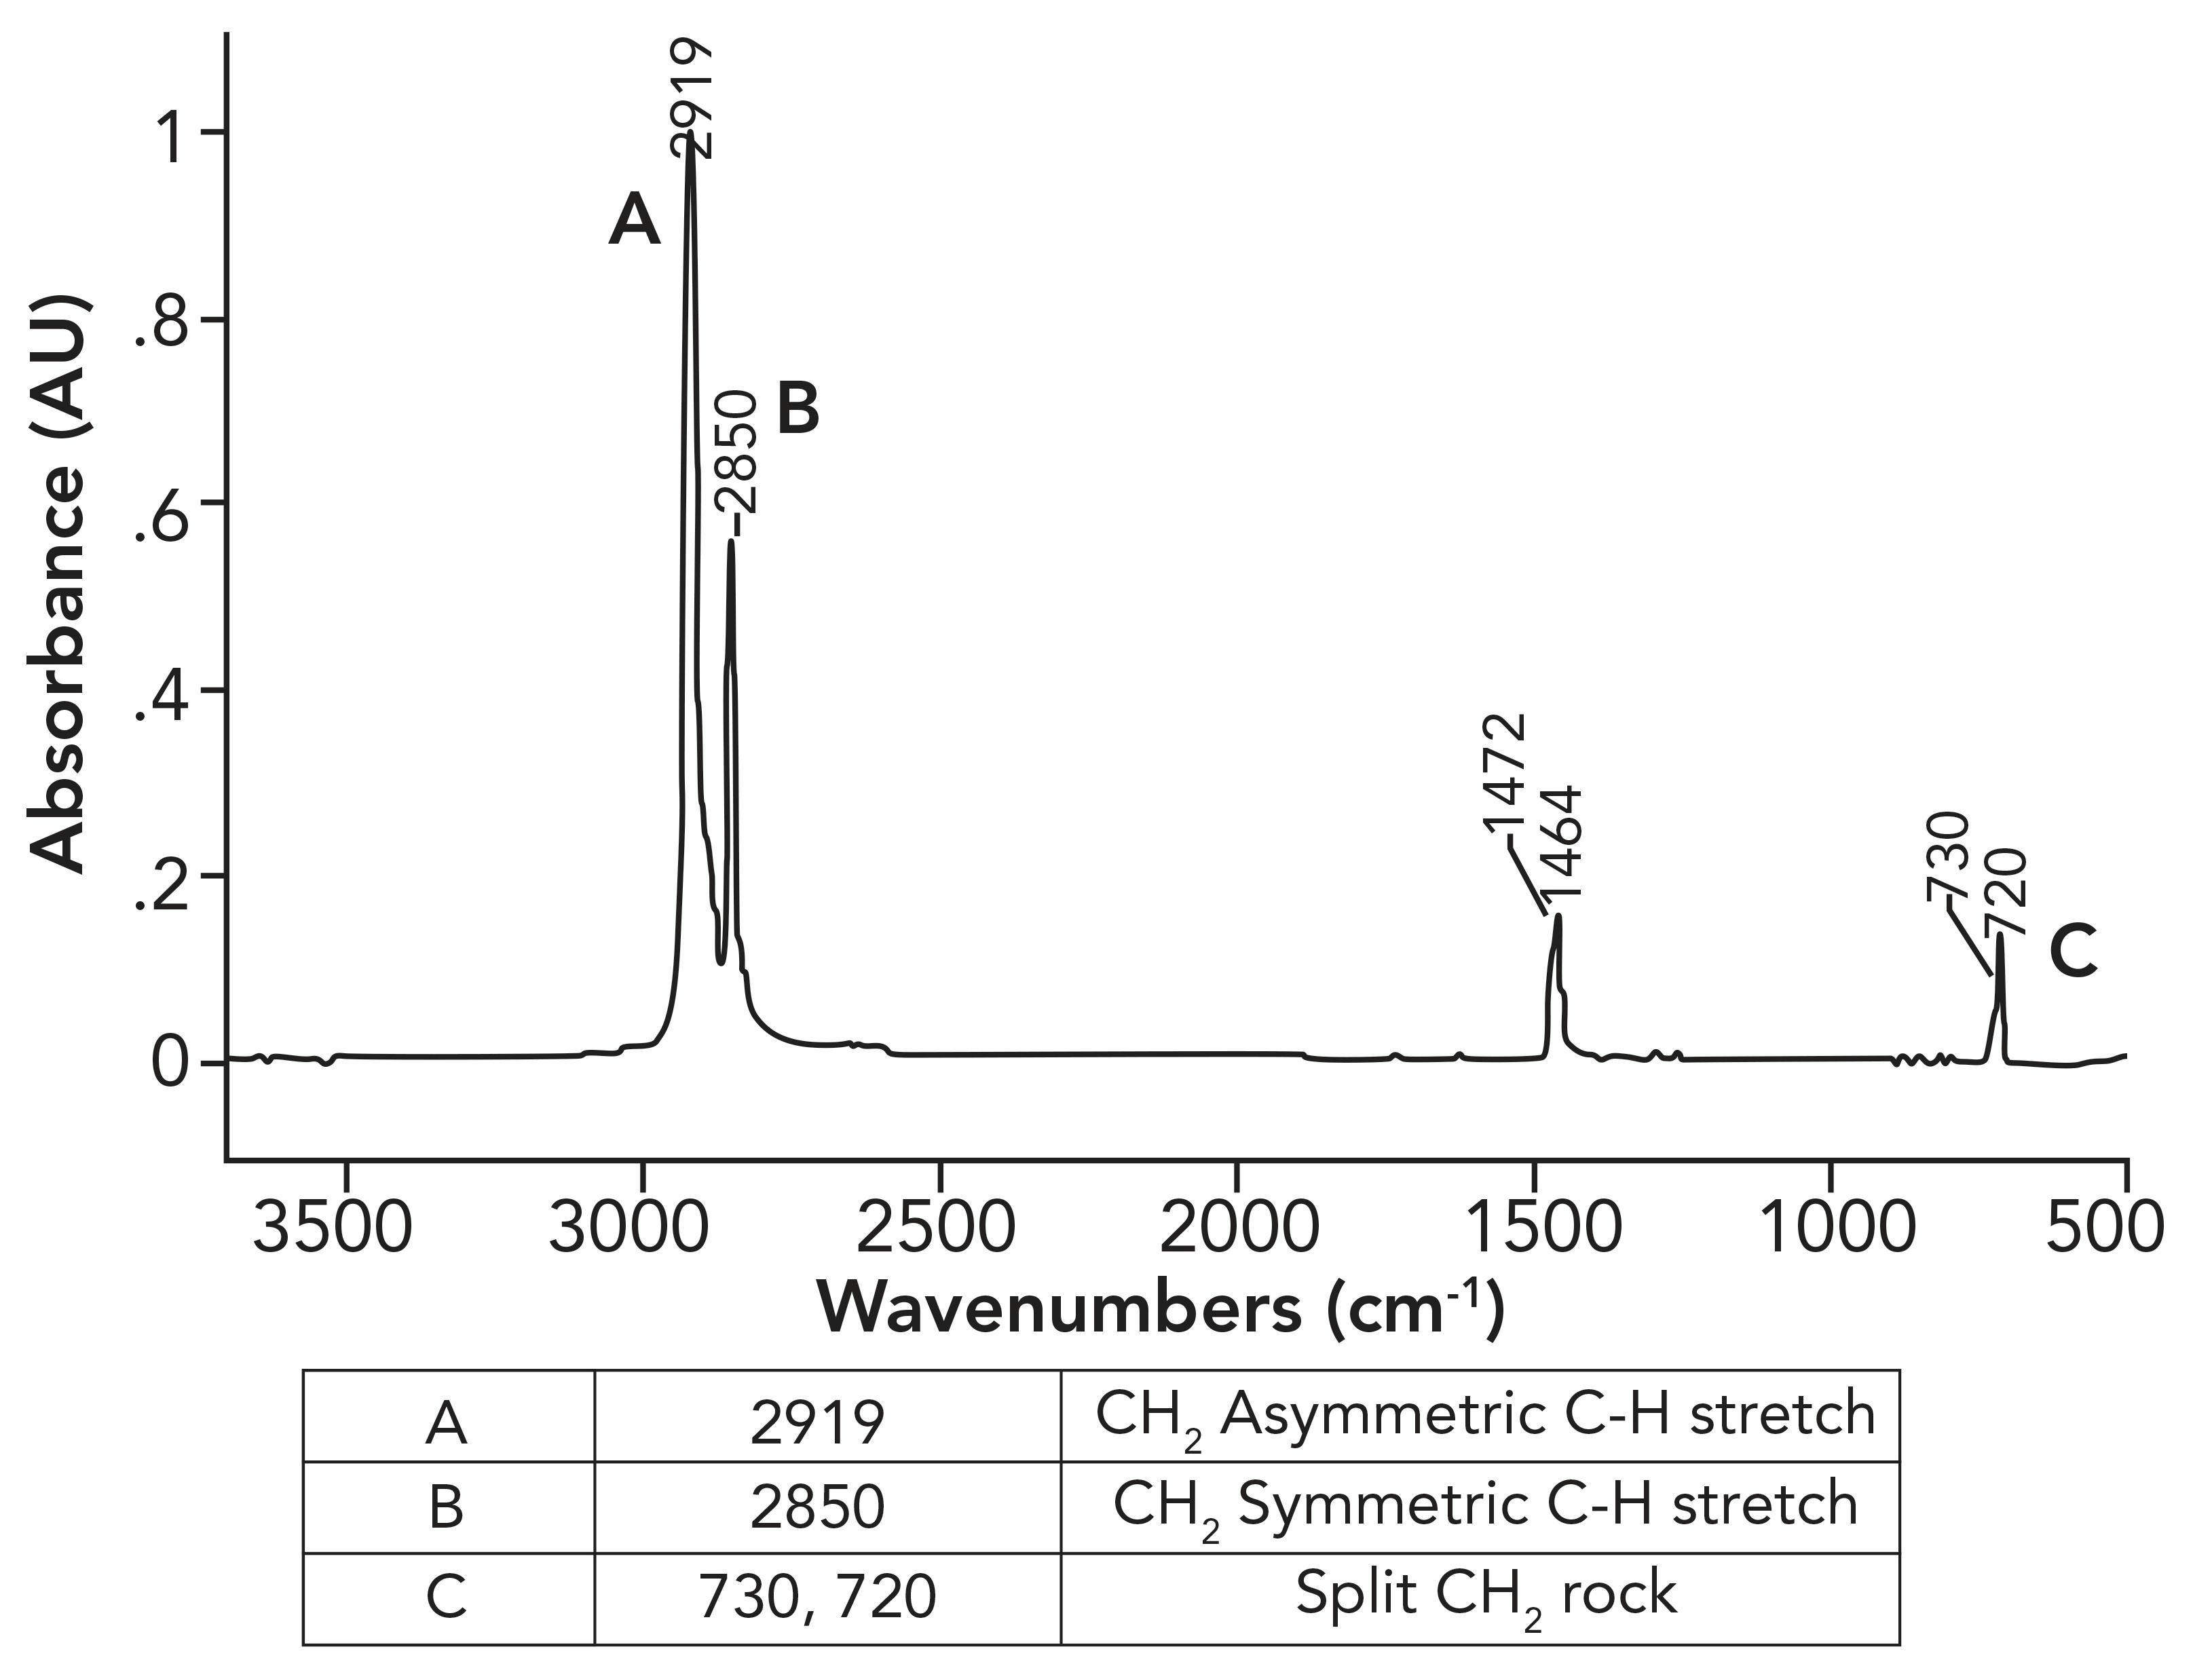 Figure 1: The infrared spectrum of high-density polyethylene (HDPE).